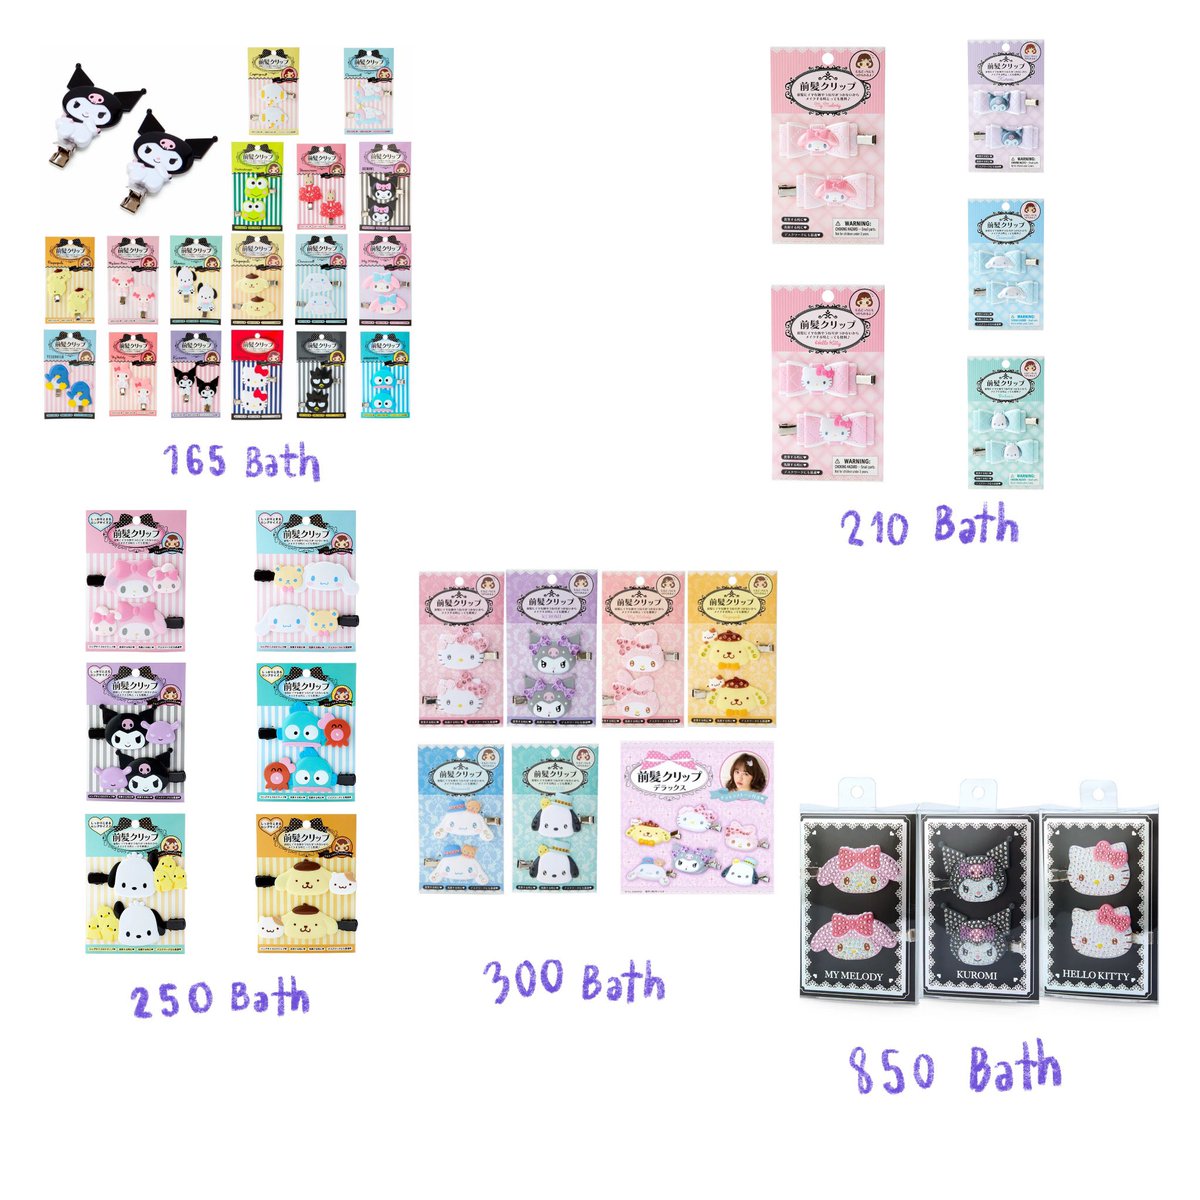 pls kinder rt 🧎🏻‍♀️
𓇼รับหิ้วญี่ปุ่น — hair clip sanrio ♡♡🎀
ปกติ 165฿
โบว์ 210฿
ตัวใหญ่ 250฿
เพชร 300฿
เพชรเต็มตัว 850฿
📦 ส่งเหมาๆ 30฿

บิน 10-15/5 ถึงไทย 16 จัดส่งไม่เกิน 18/5 ค่า ⭐️
ของหมดคืนเงินค่า

𓊆ྀི สนใจสั่งซื้อ dm ค่า𓊇ྀི

#หิ้วญี่ปุ่น #รับหิ้วญี่ปุ่น #ตลาดนัดsanrio